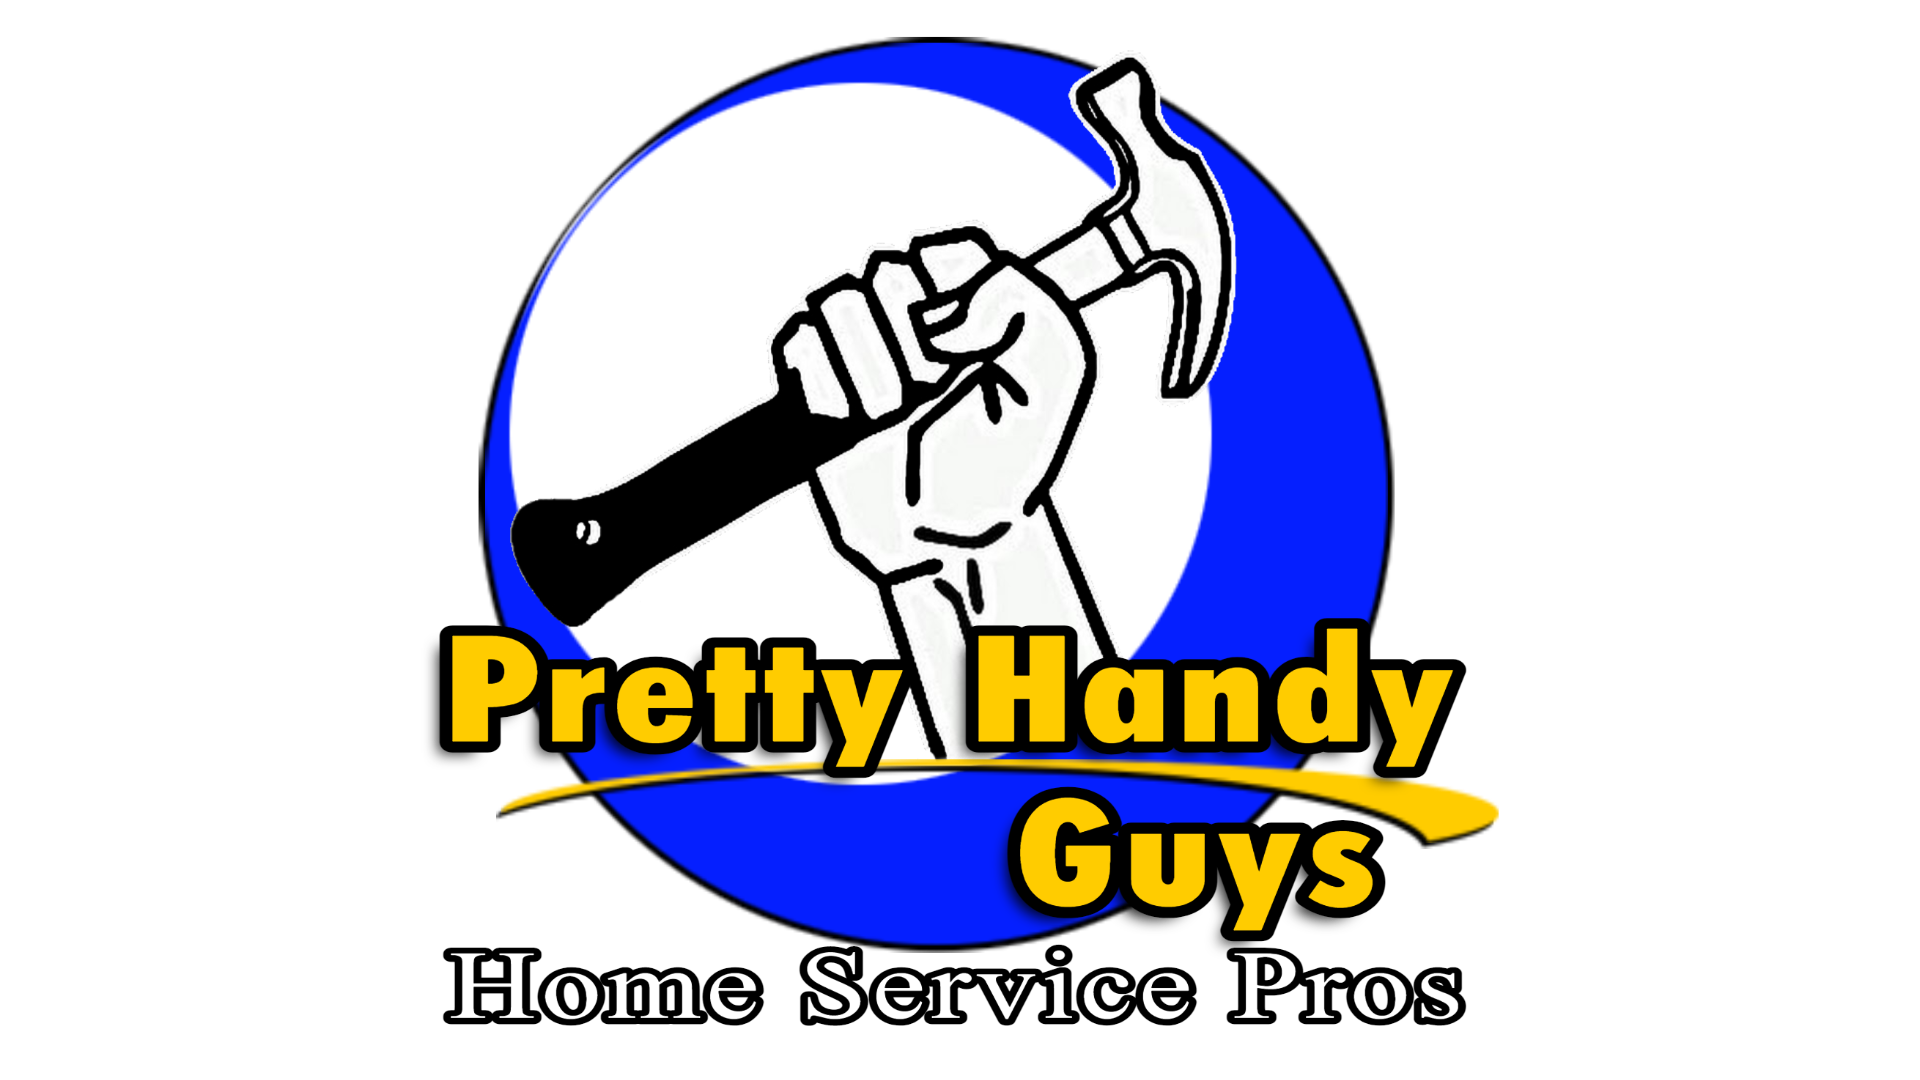 Pretty Handy Guys Home Service Pros